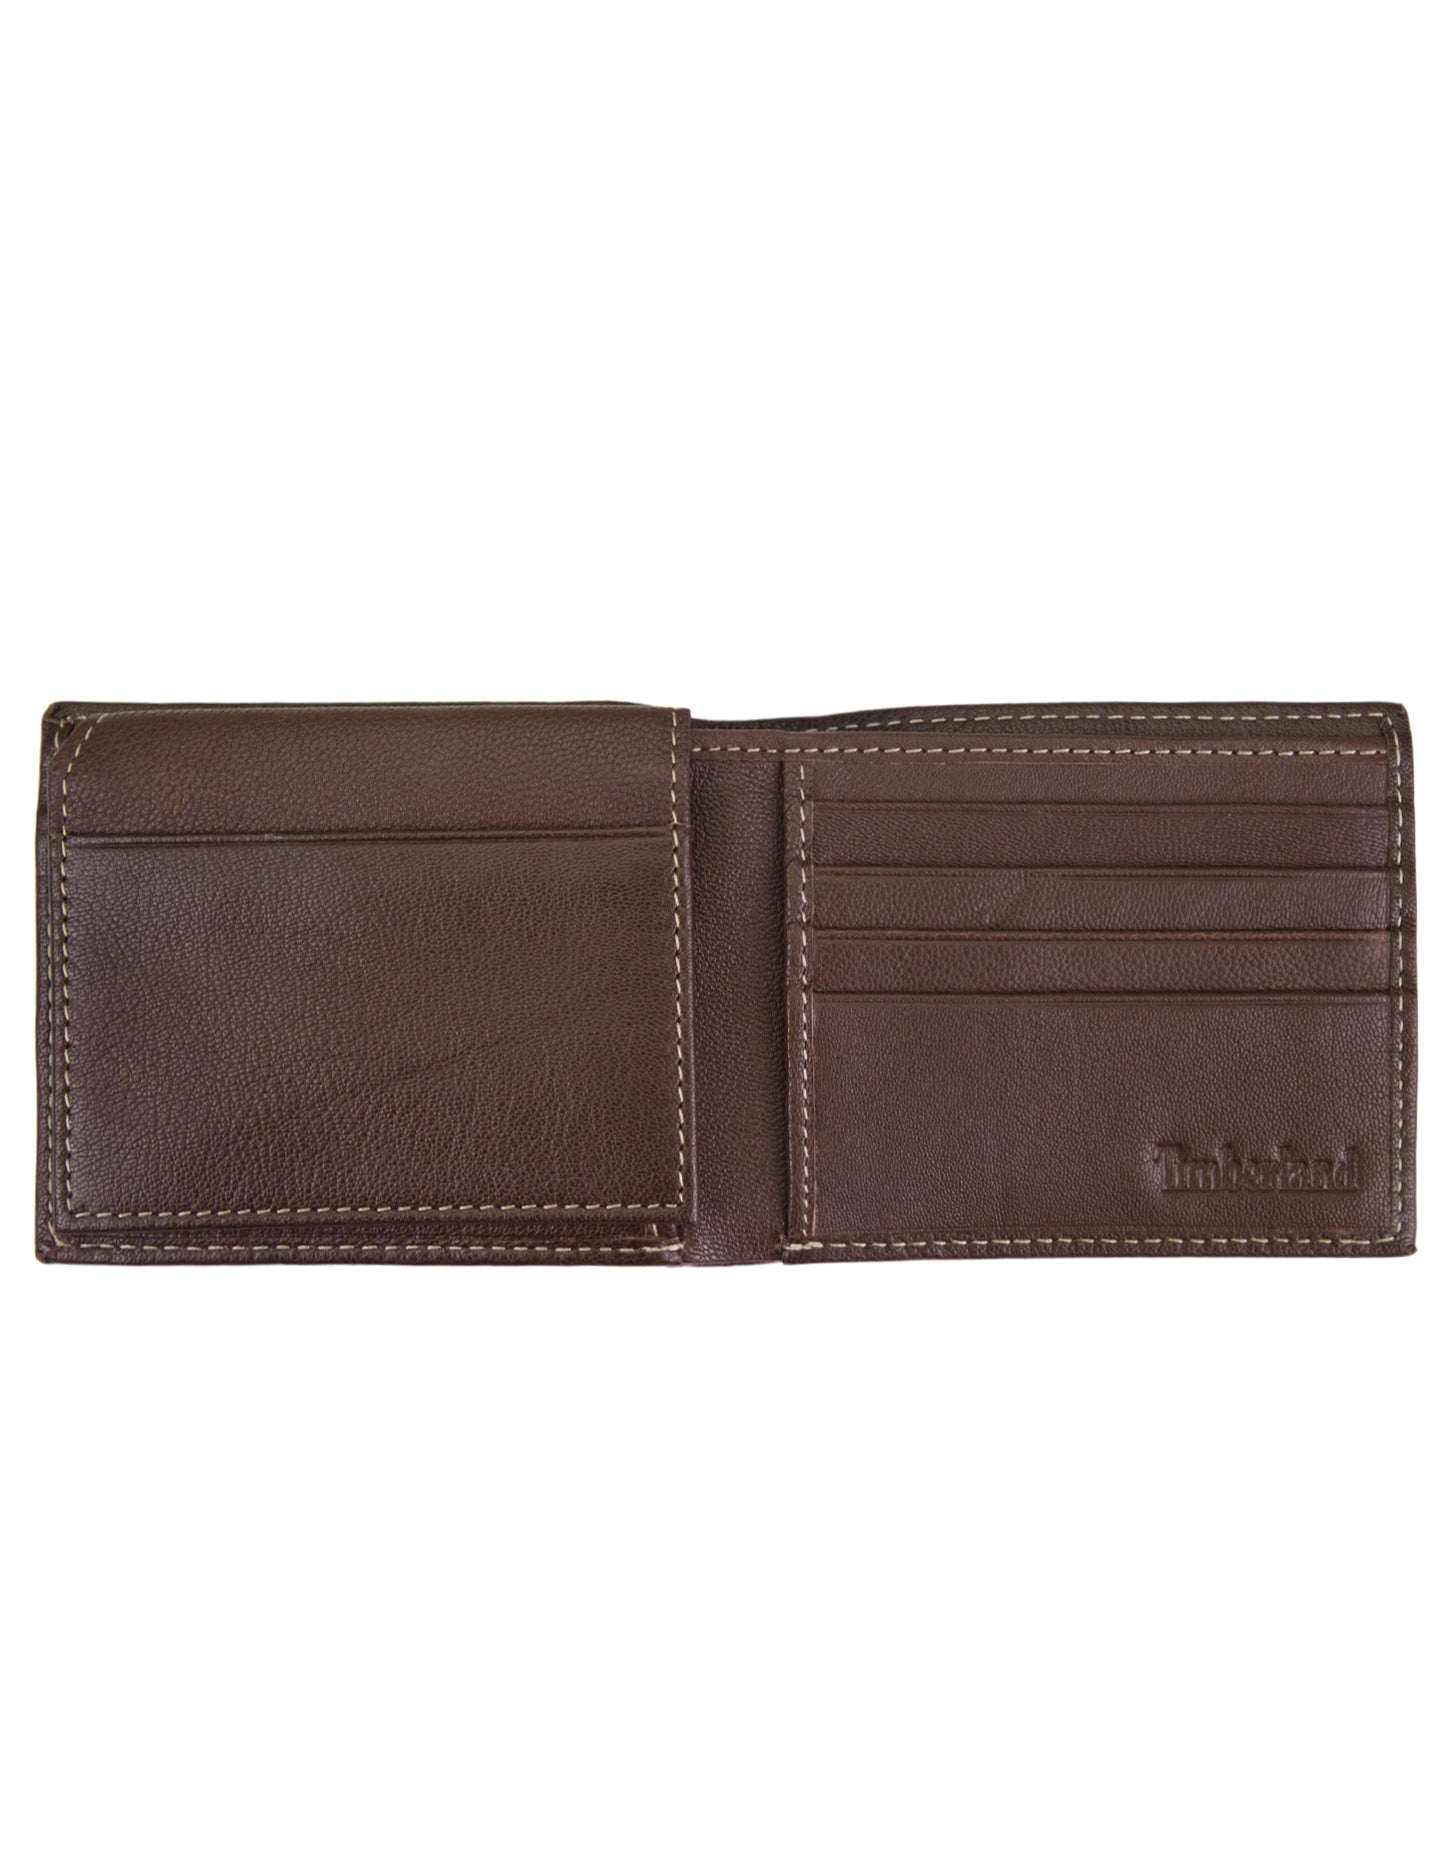 Timberland Men's Bifold Wallet Passcase – Elliot Avenue by Label